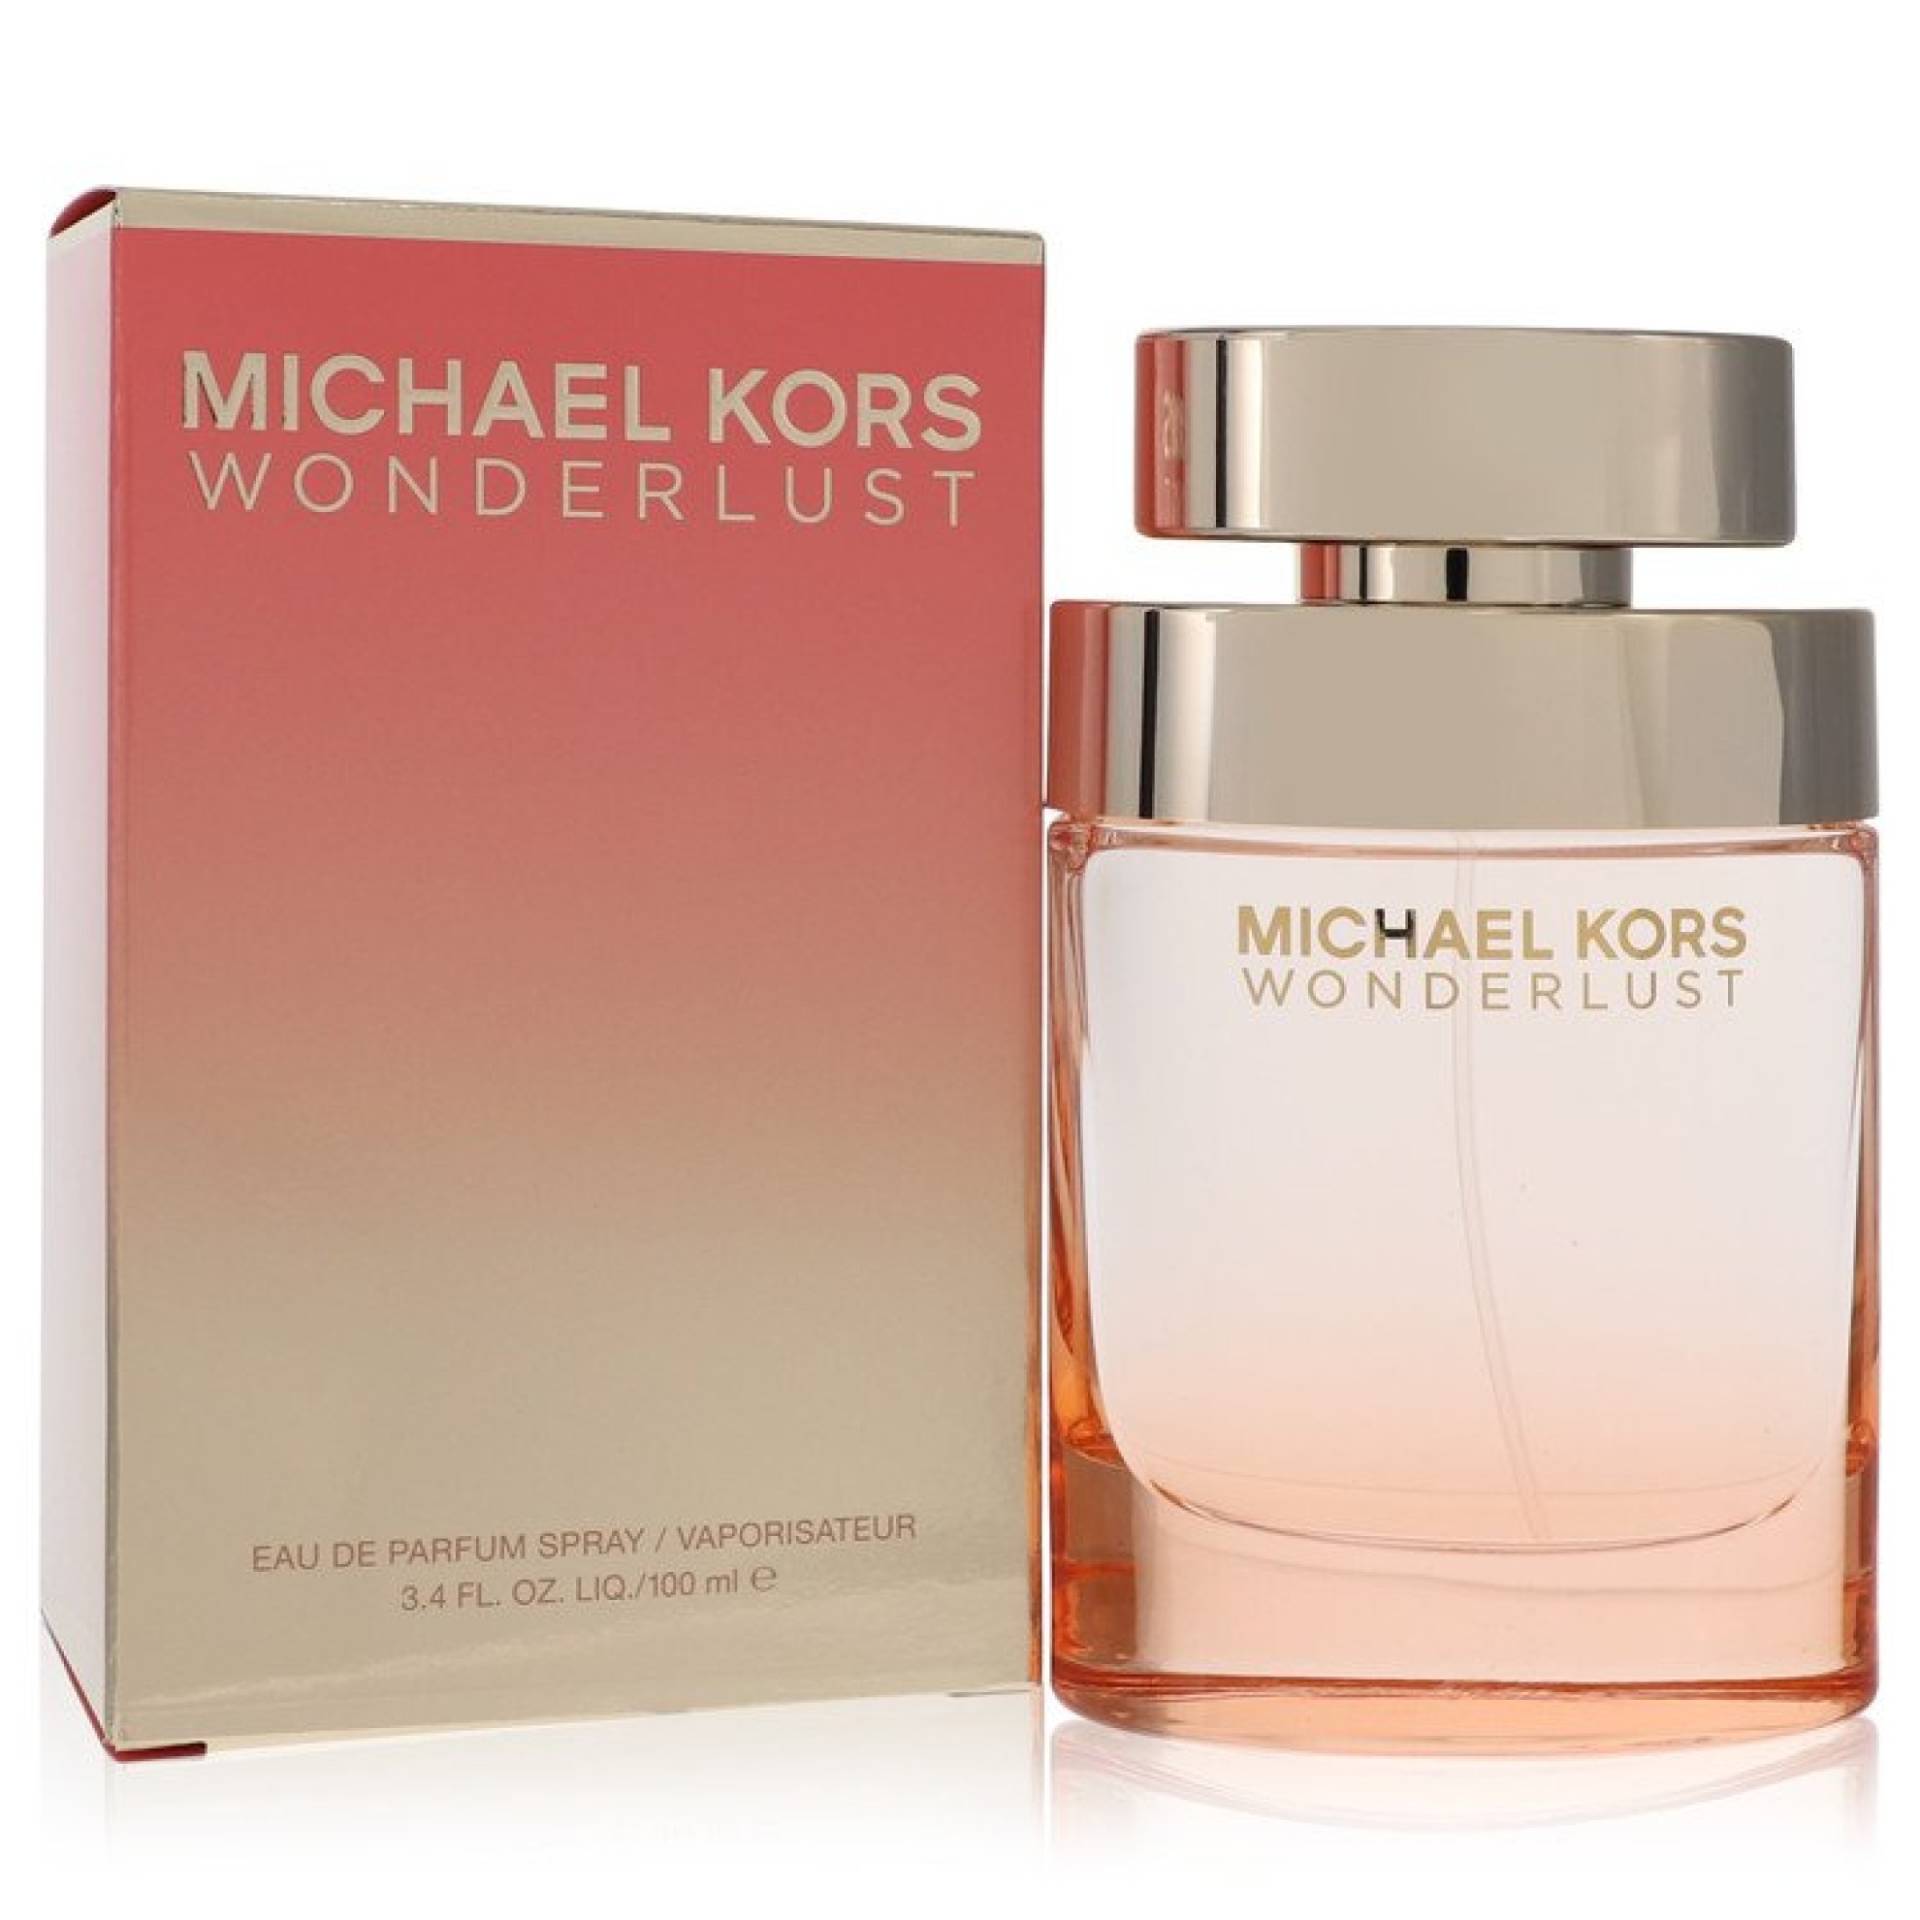 Michael Kors Wonderlust Eau De Parfum Spray 100 ml von Michael Kors